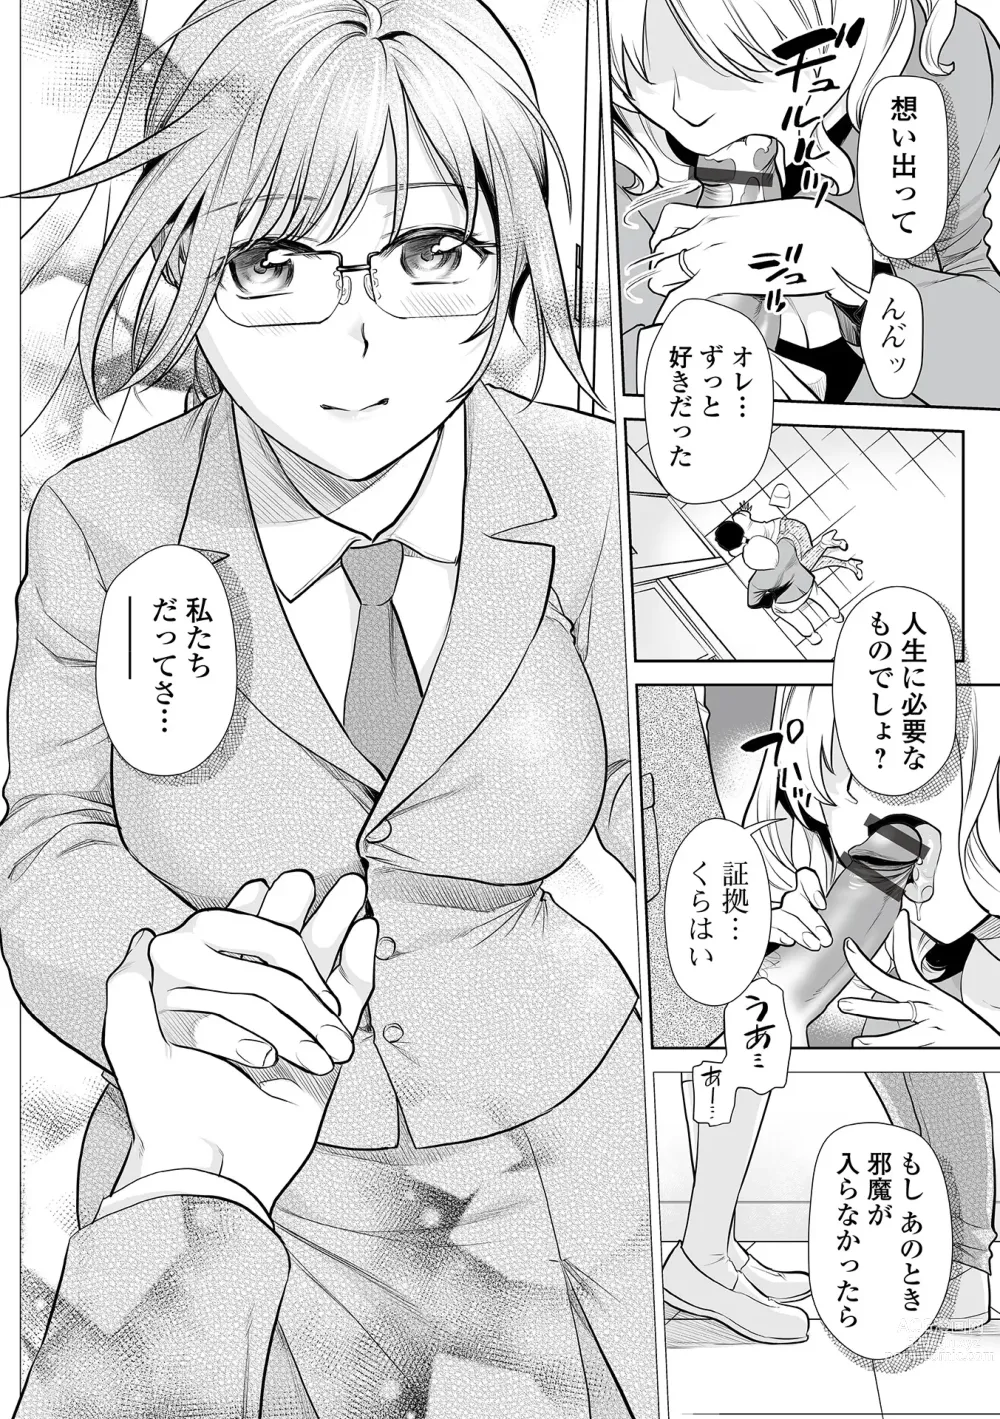 Page 6 of manga Web Comic Toutetsu Vol. 87